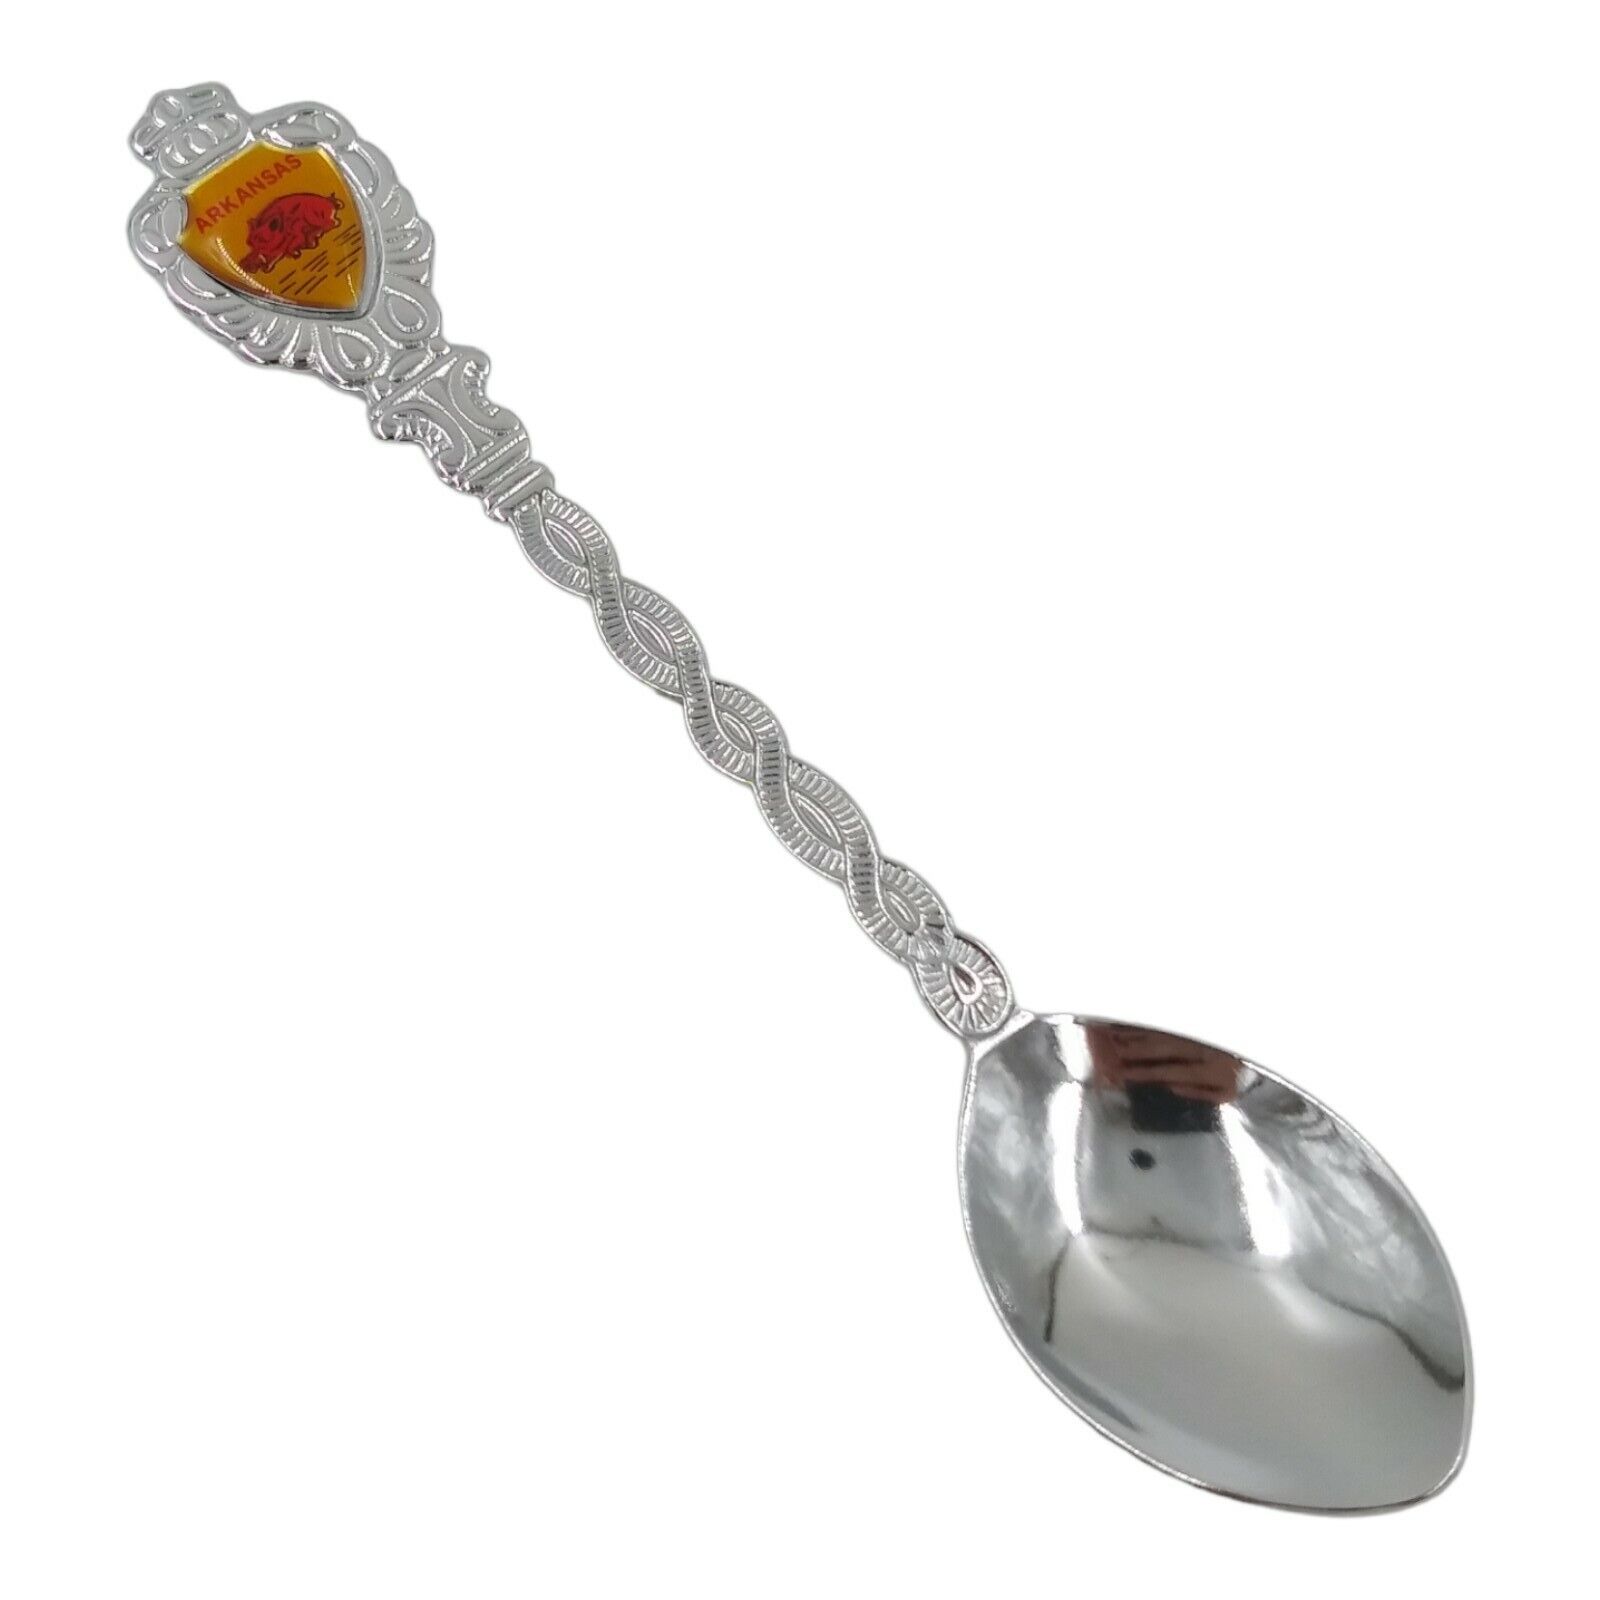 Vintage Arkansas Razor Backs Souvenir Spoon US Collectible